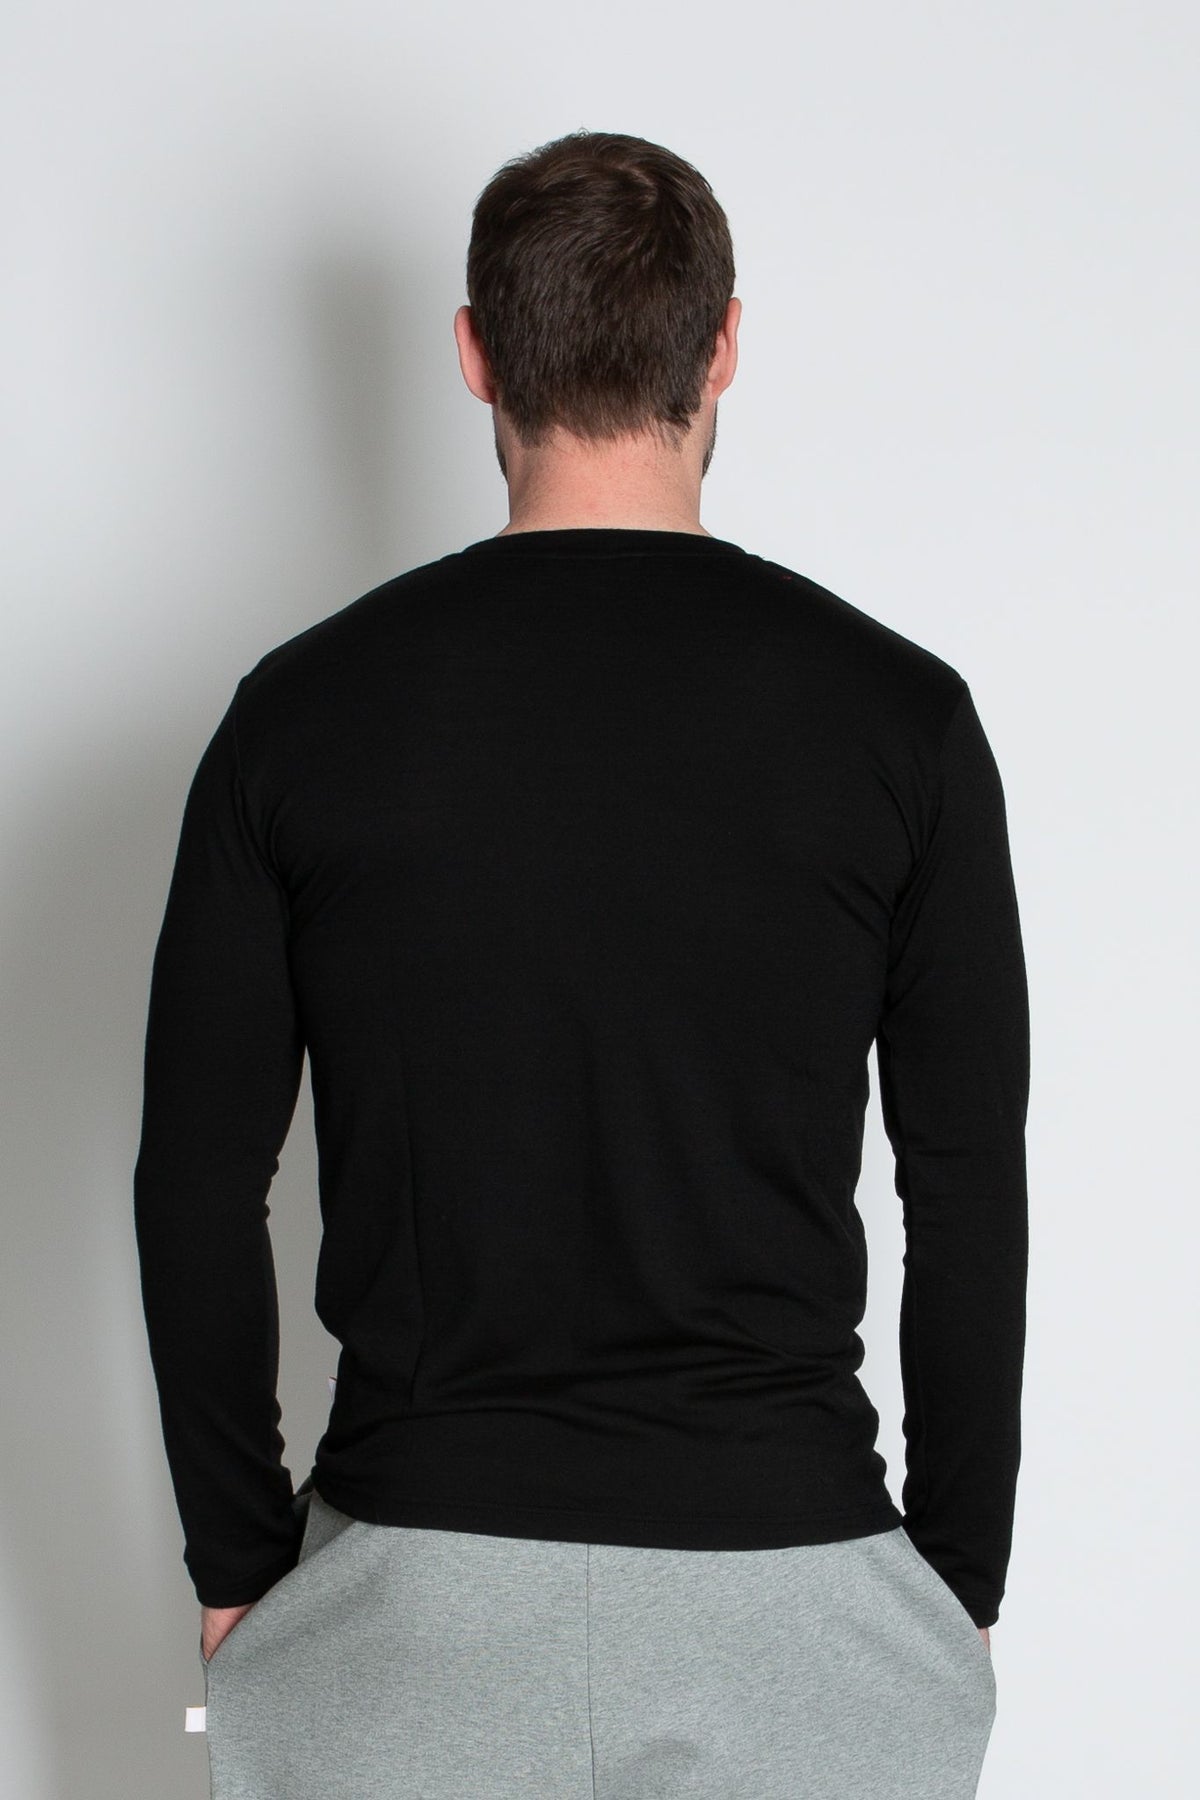 Back view of male model wearing black marvel merino long sleeve tee against blue background